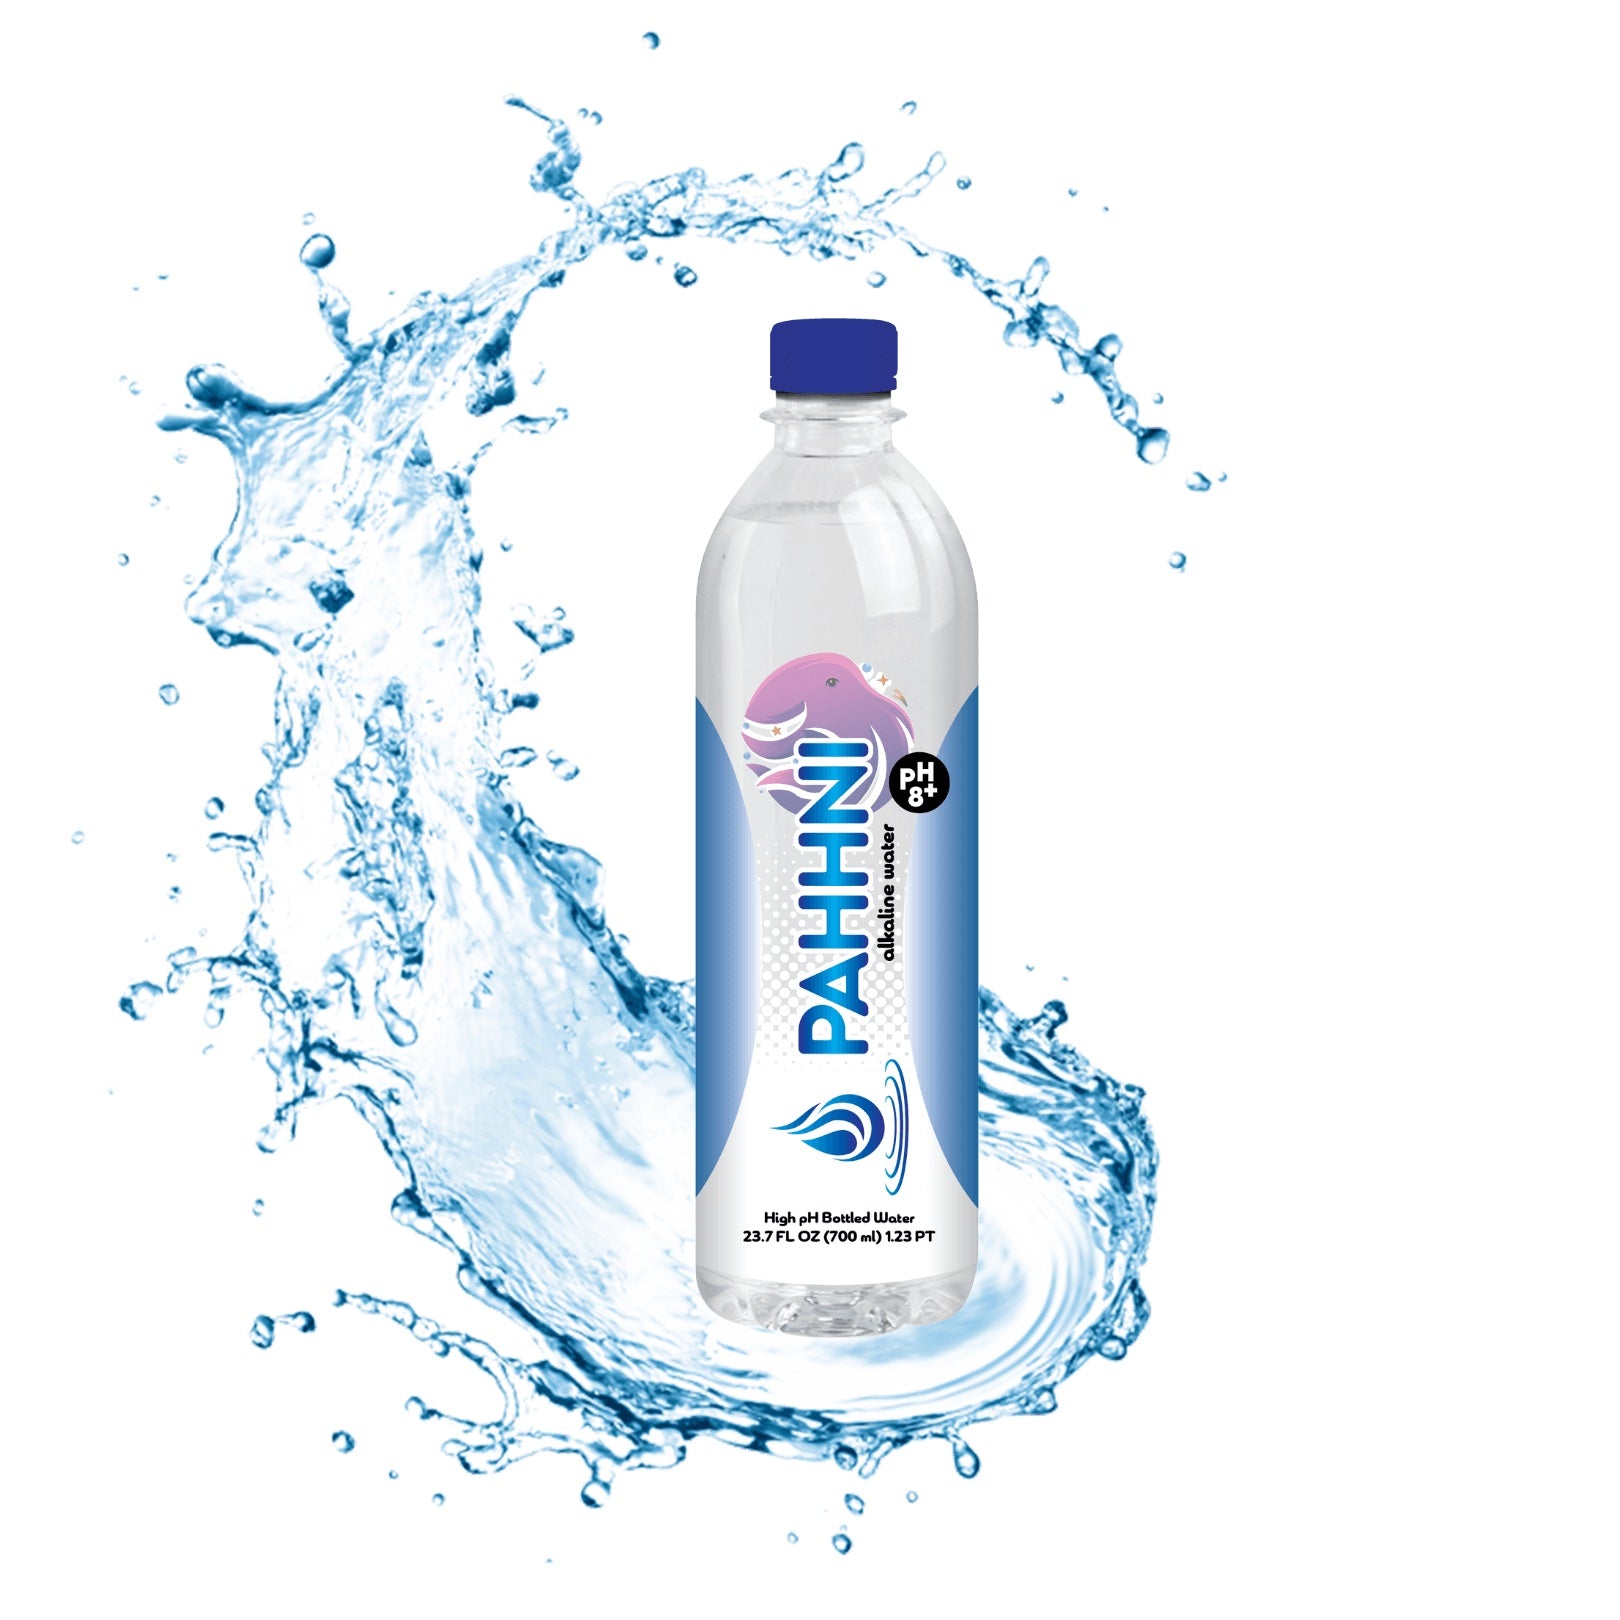 Pahhni® Premium Alkaline Water - 12 Pack